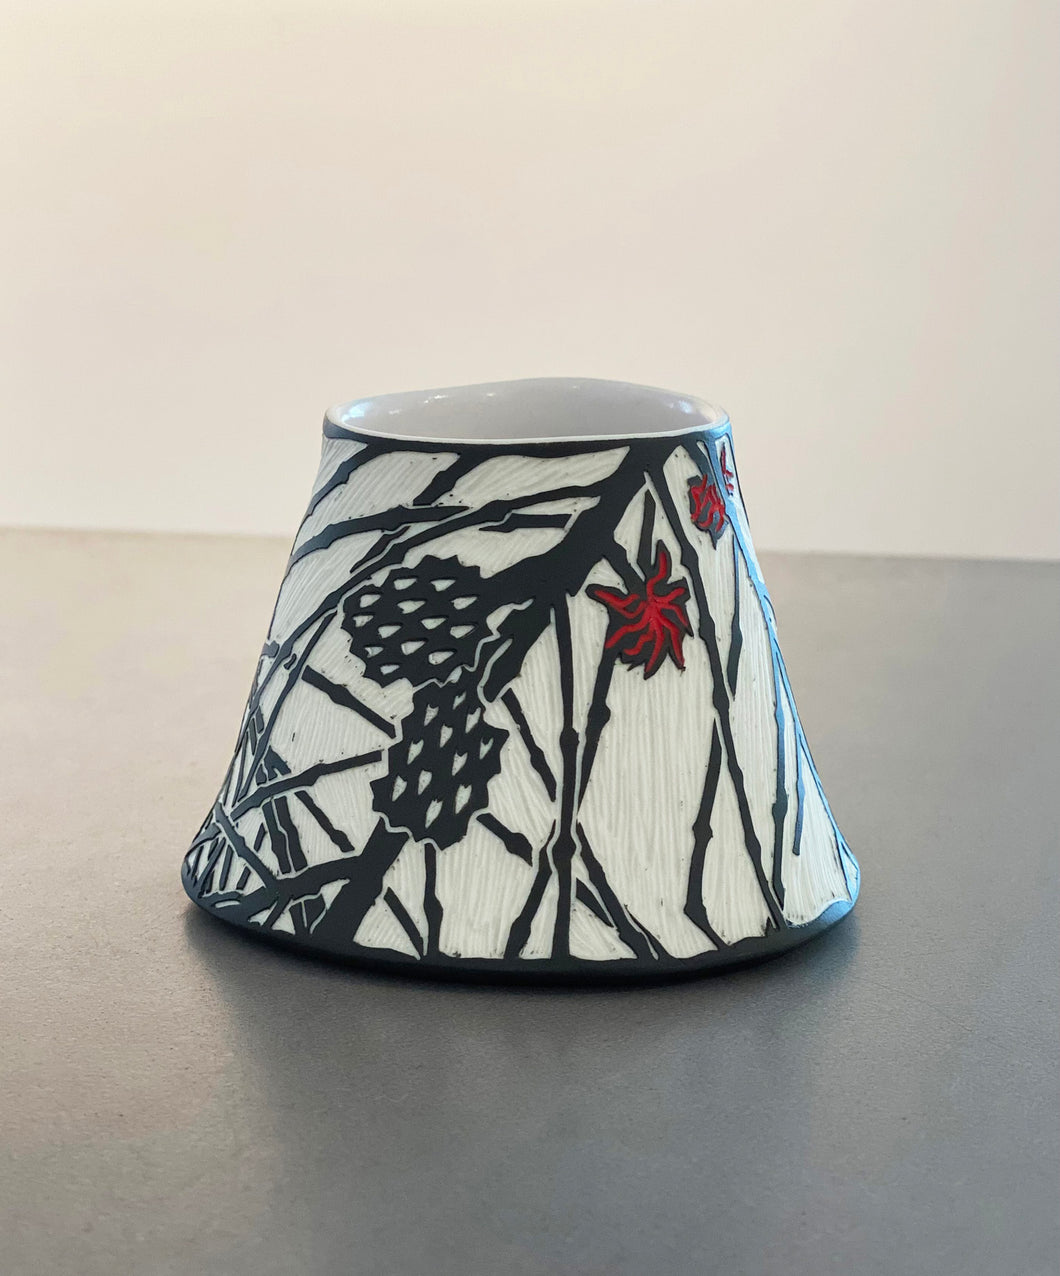 'Drooping Sheoak' porcelain vase by Cathy Franzi